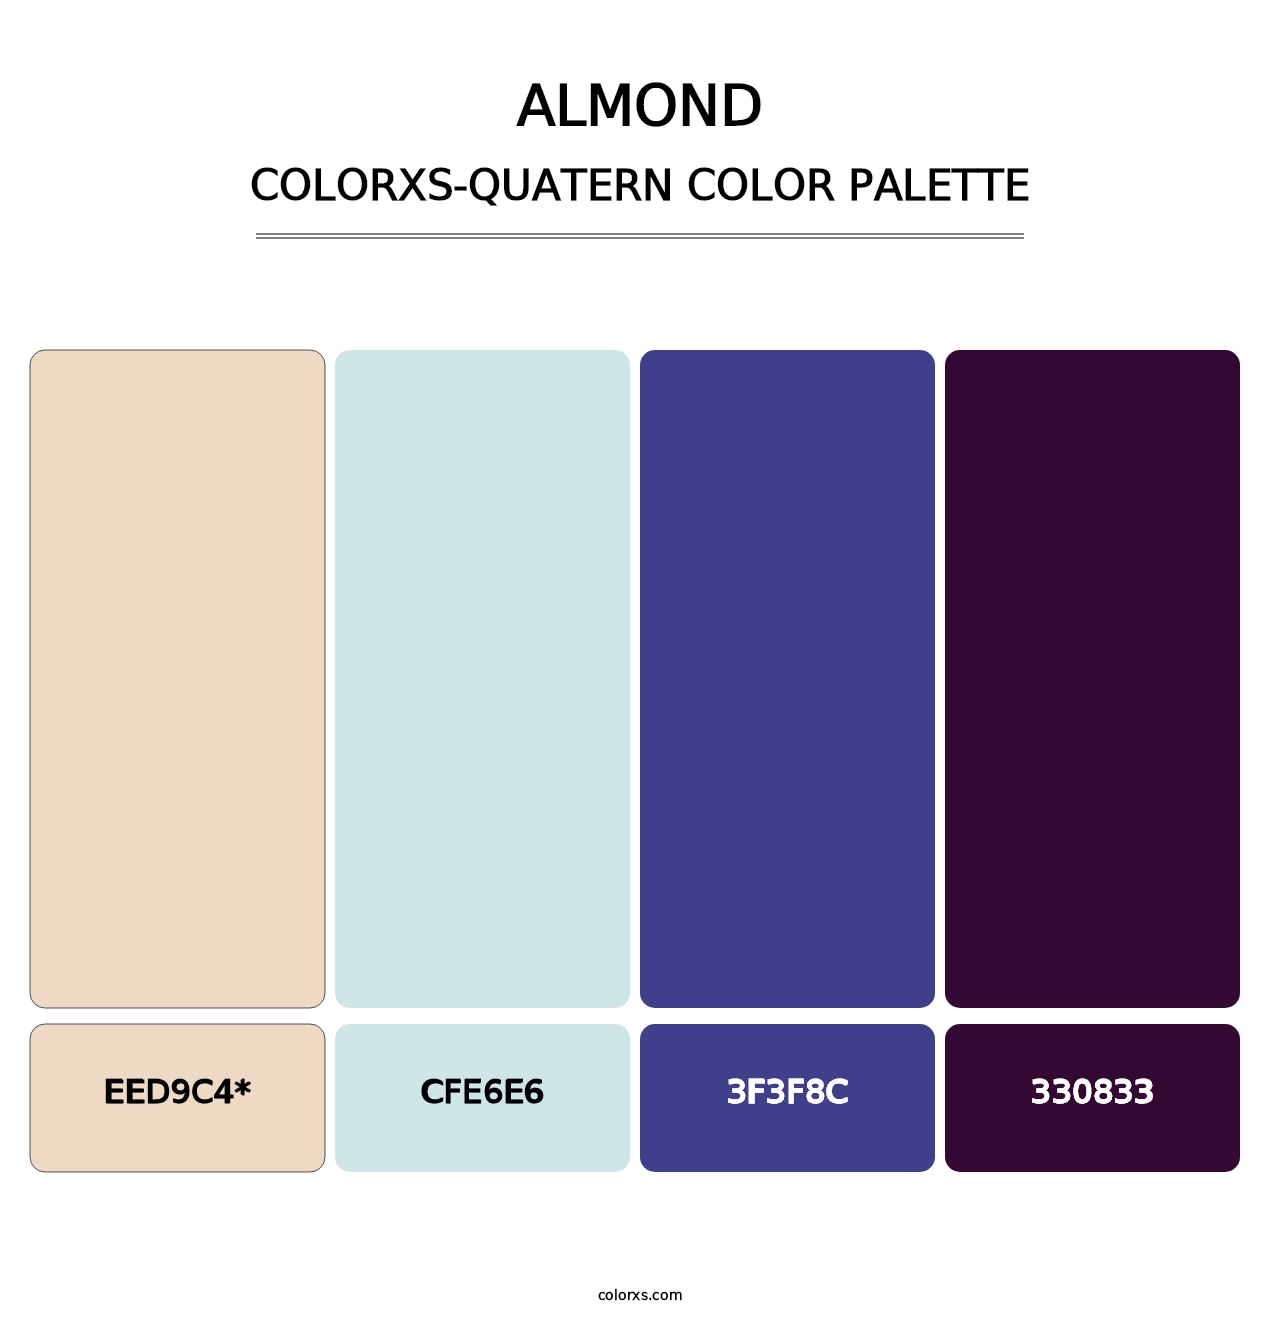 Almond - Colorxs Quatern Palette